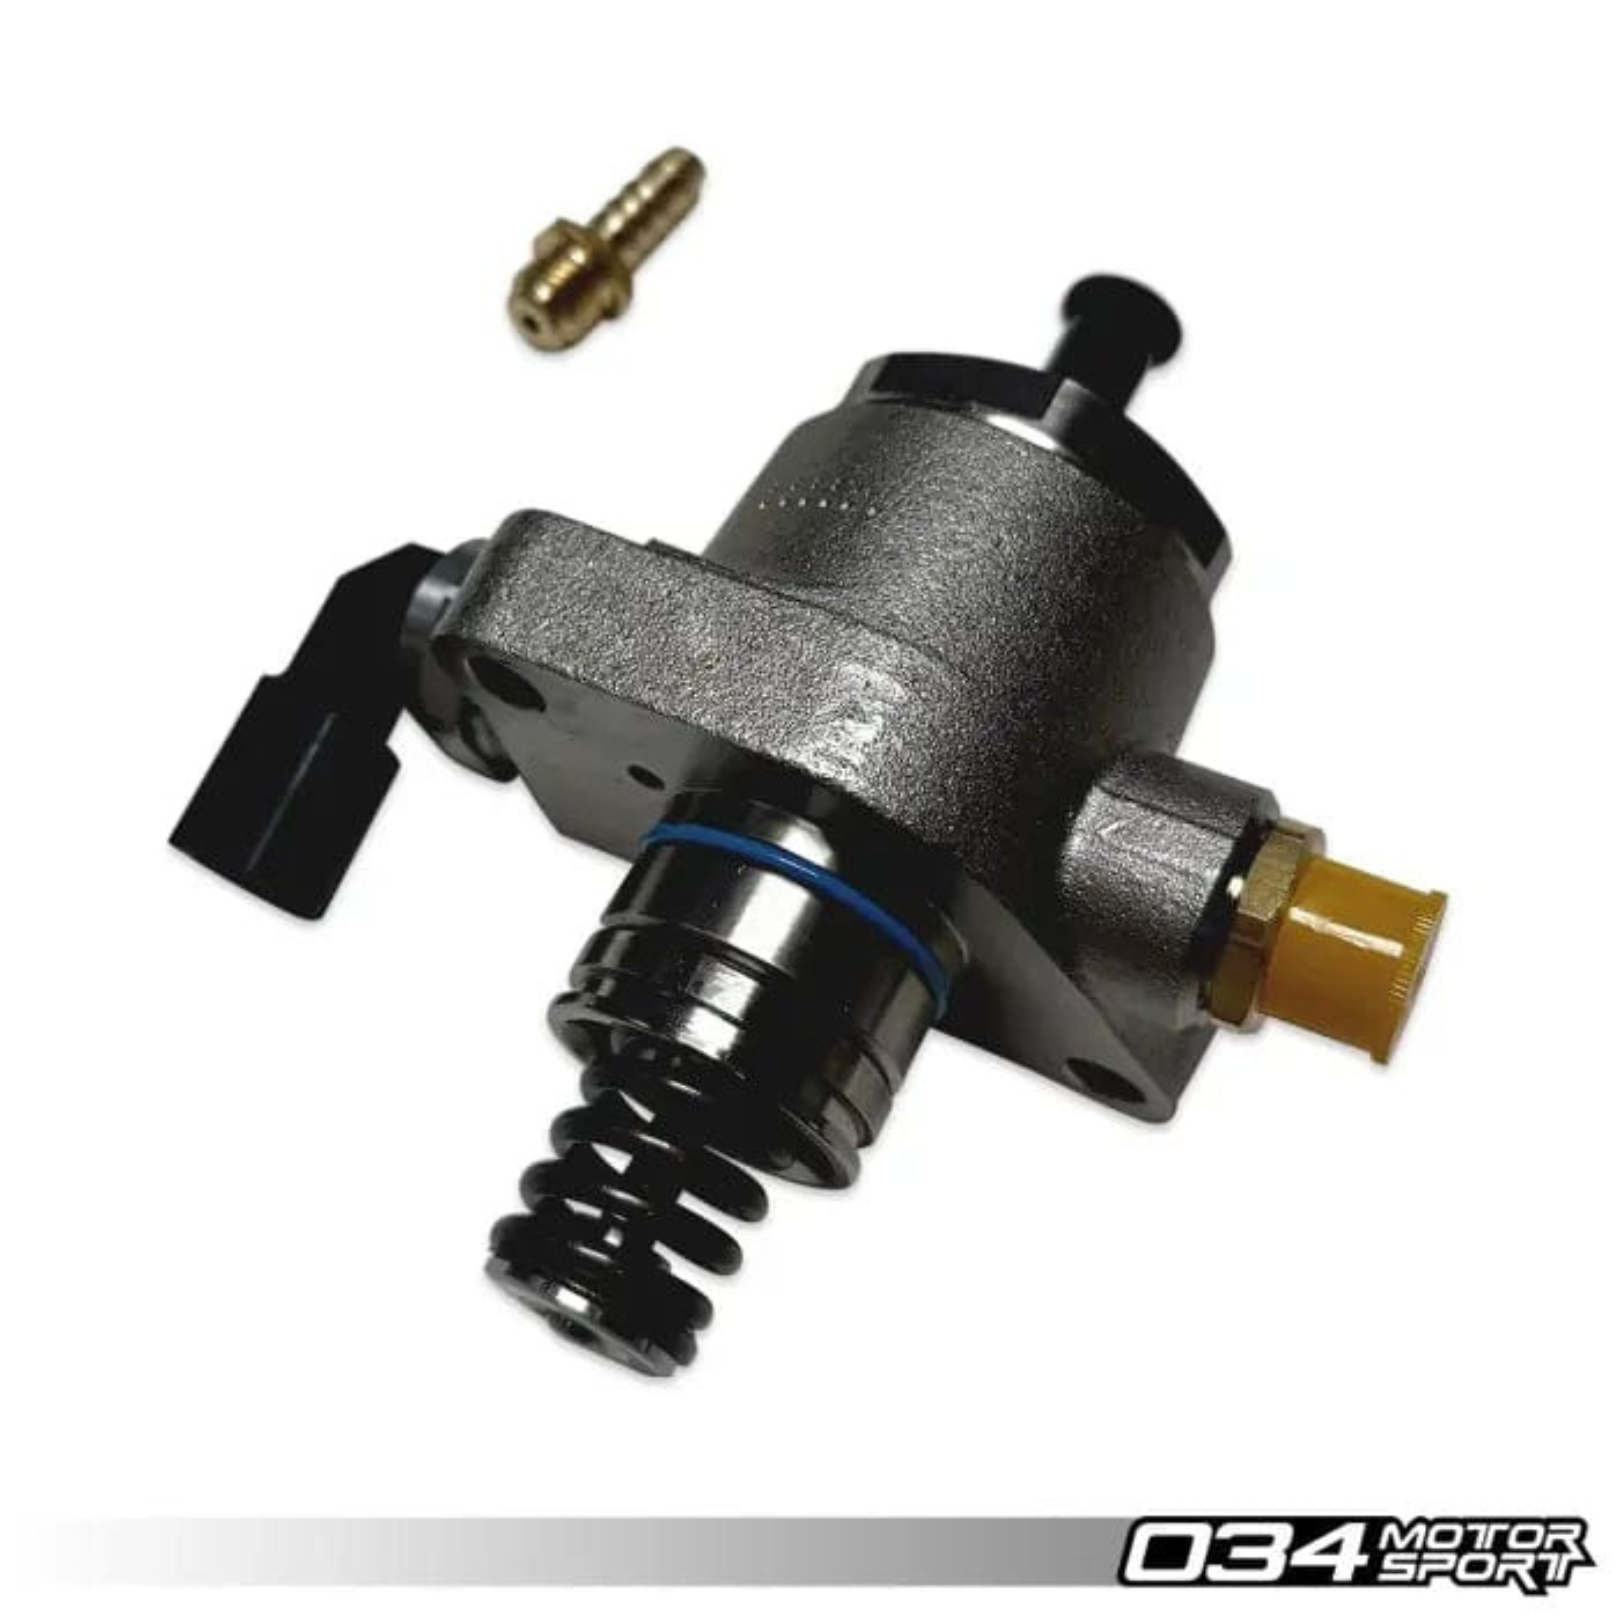 034 Motorsport - High Pressure Fuel Pump Upgrade (Whole Unit) - VW MK7 & 7.5 Golf - 034-106-6060